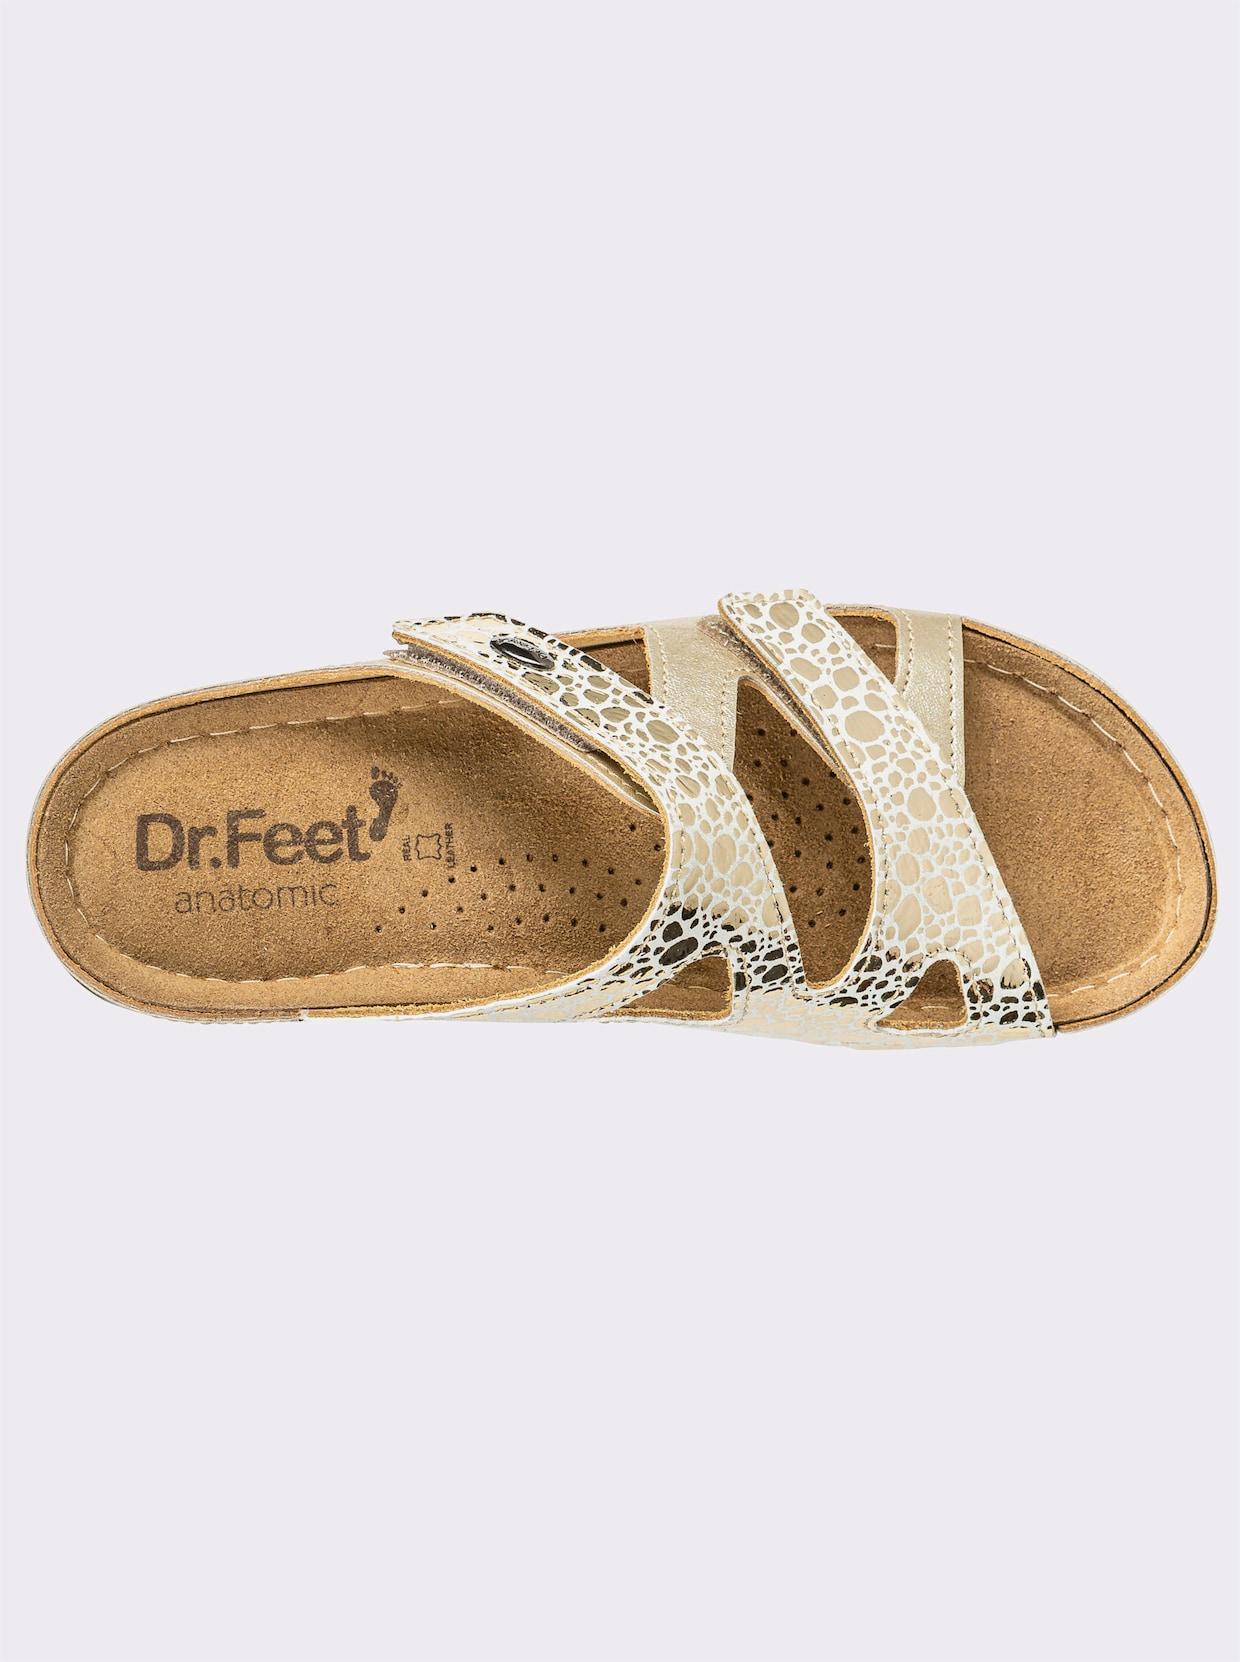 Dr. Feet Pantolette - goldfarben